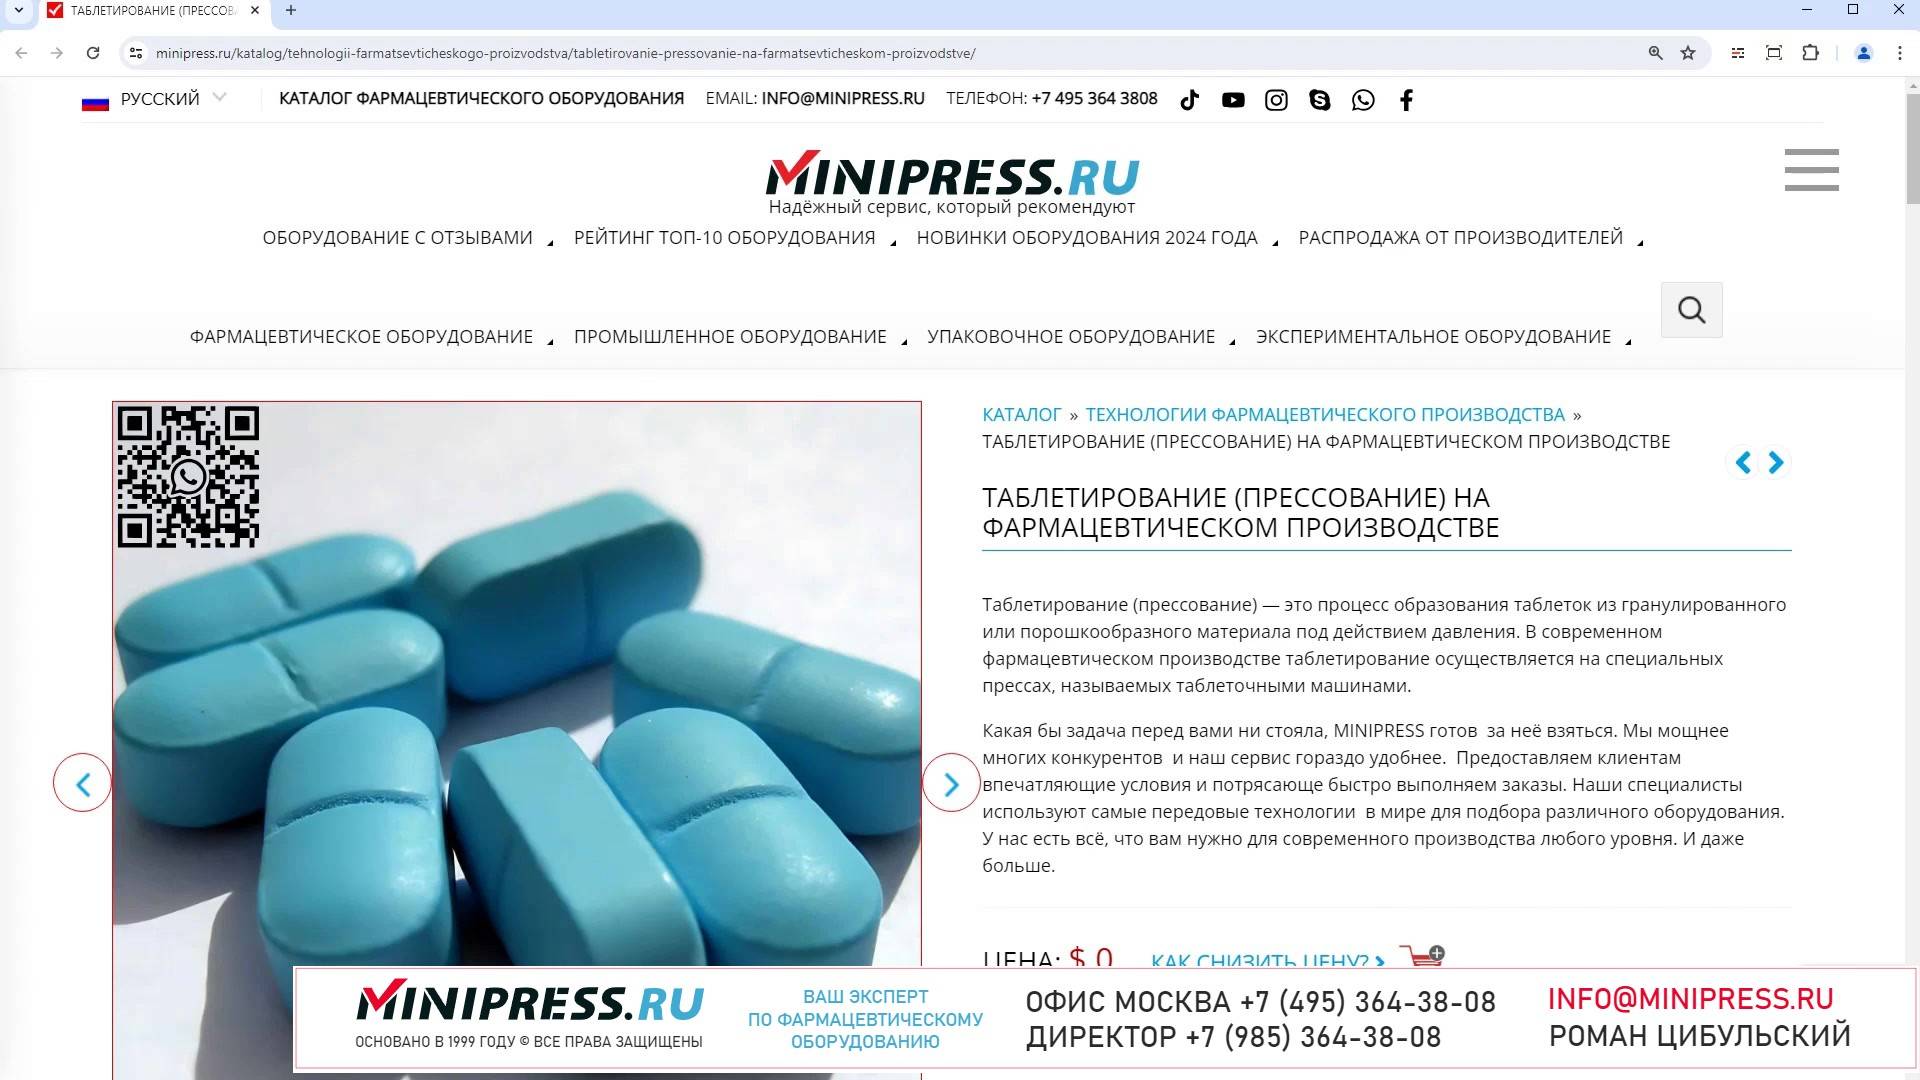 Minipress.ru Таблетирование (прессование) на фармацевтическом производстве